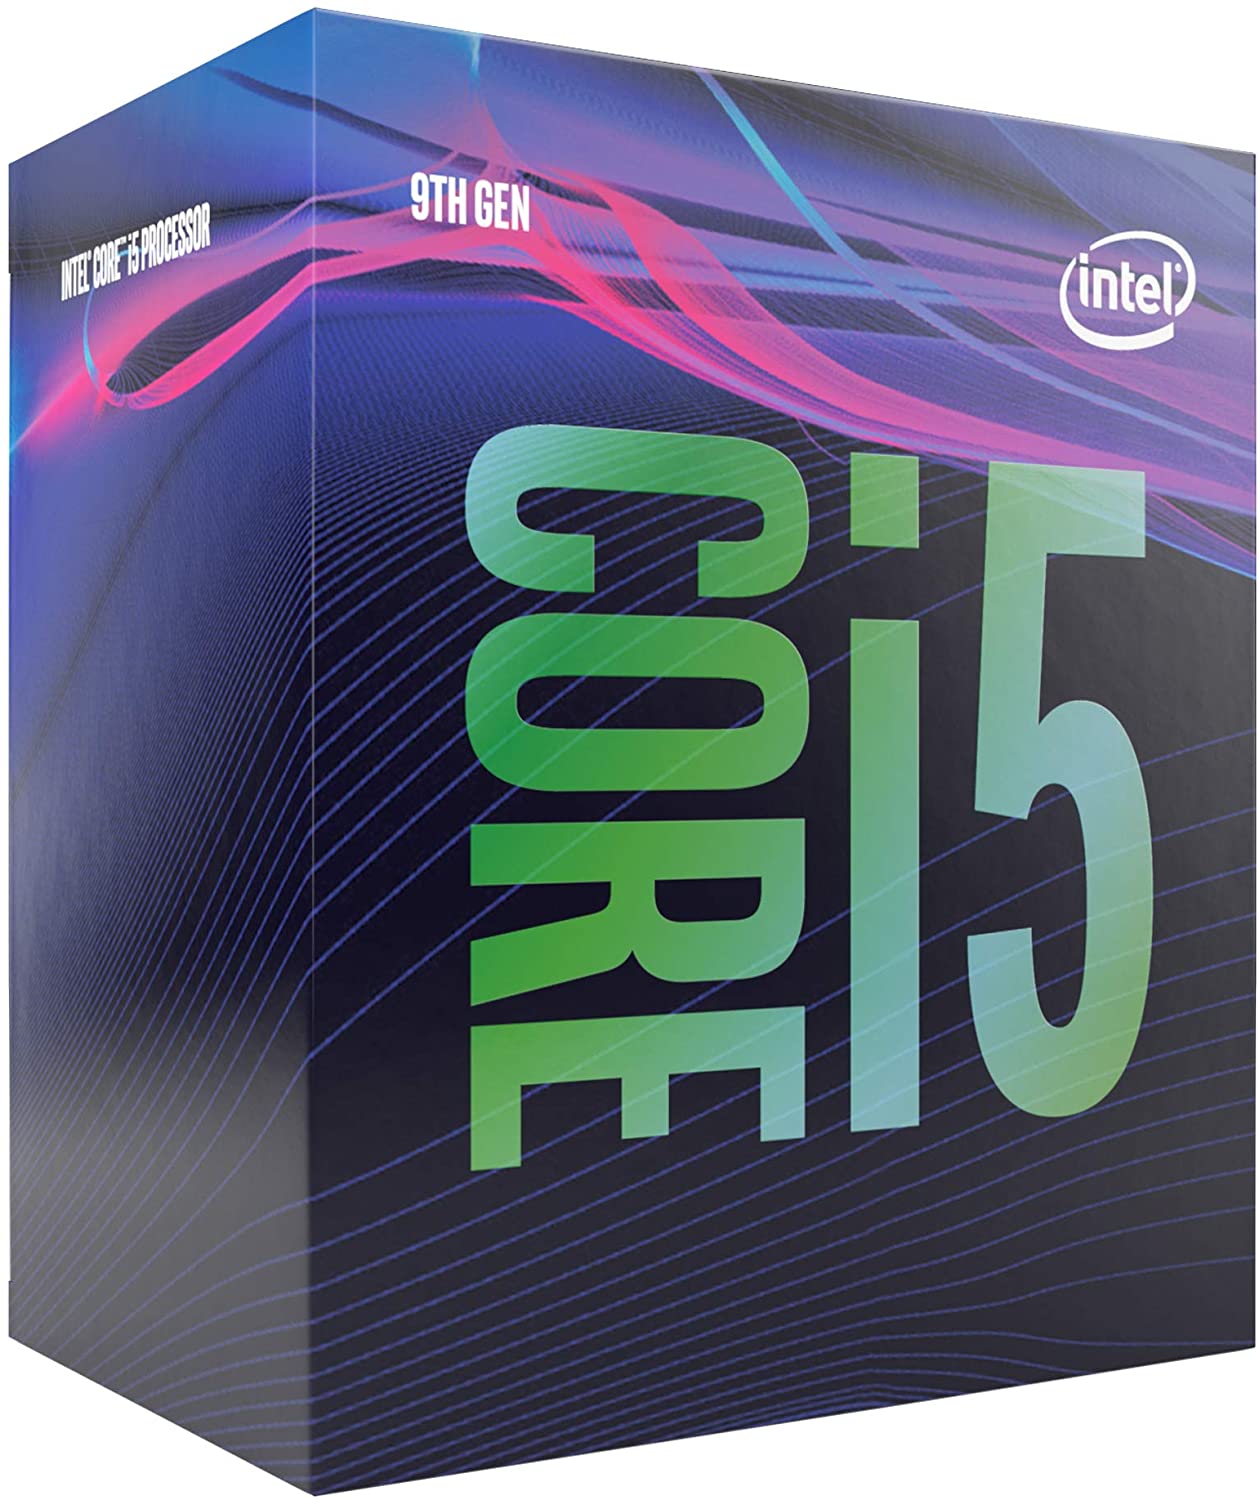 Intel i5 processor